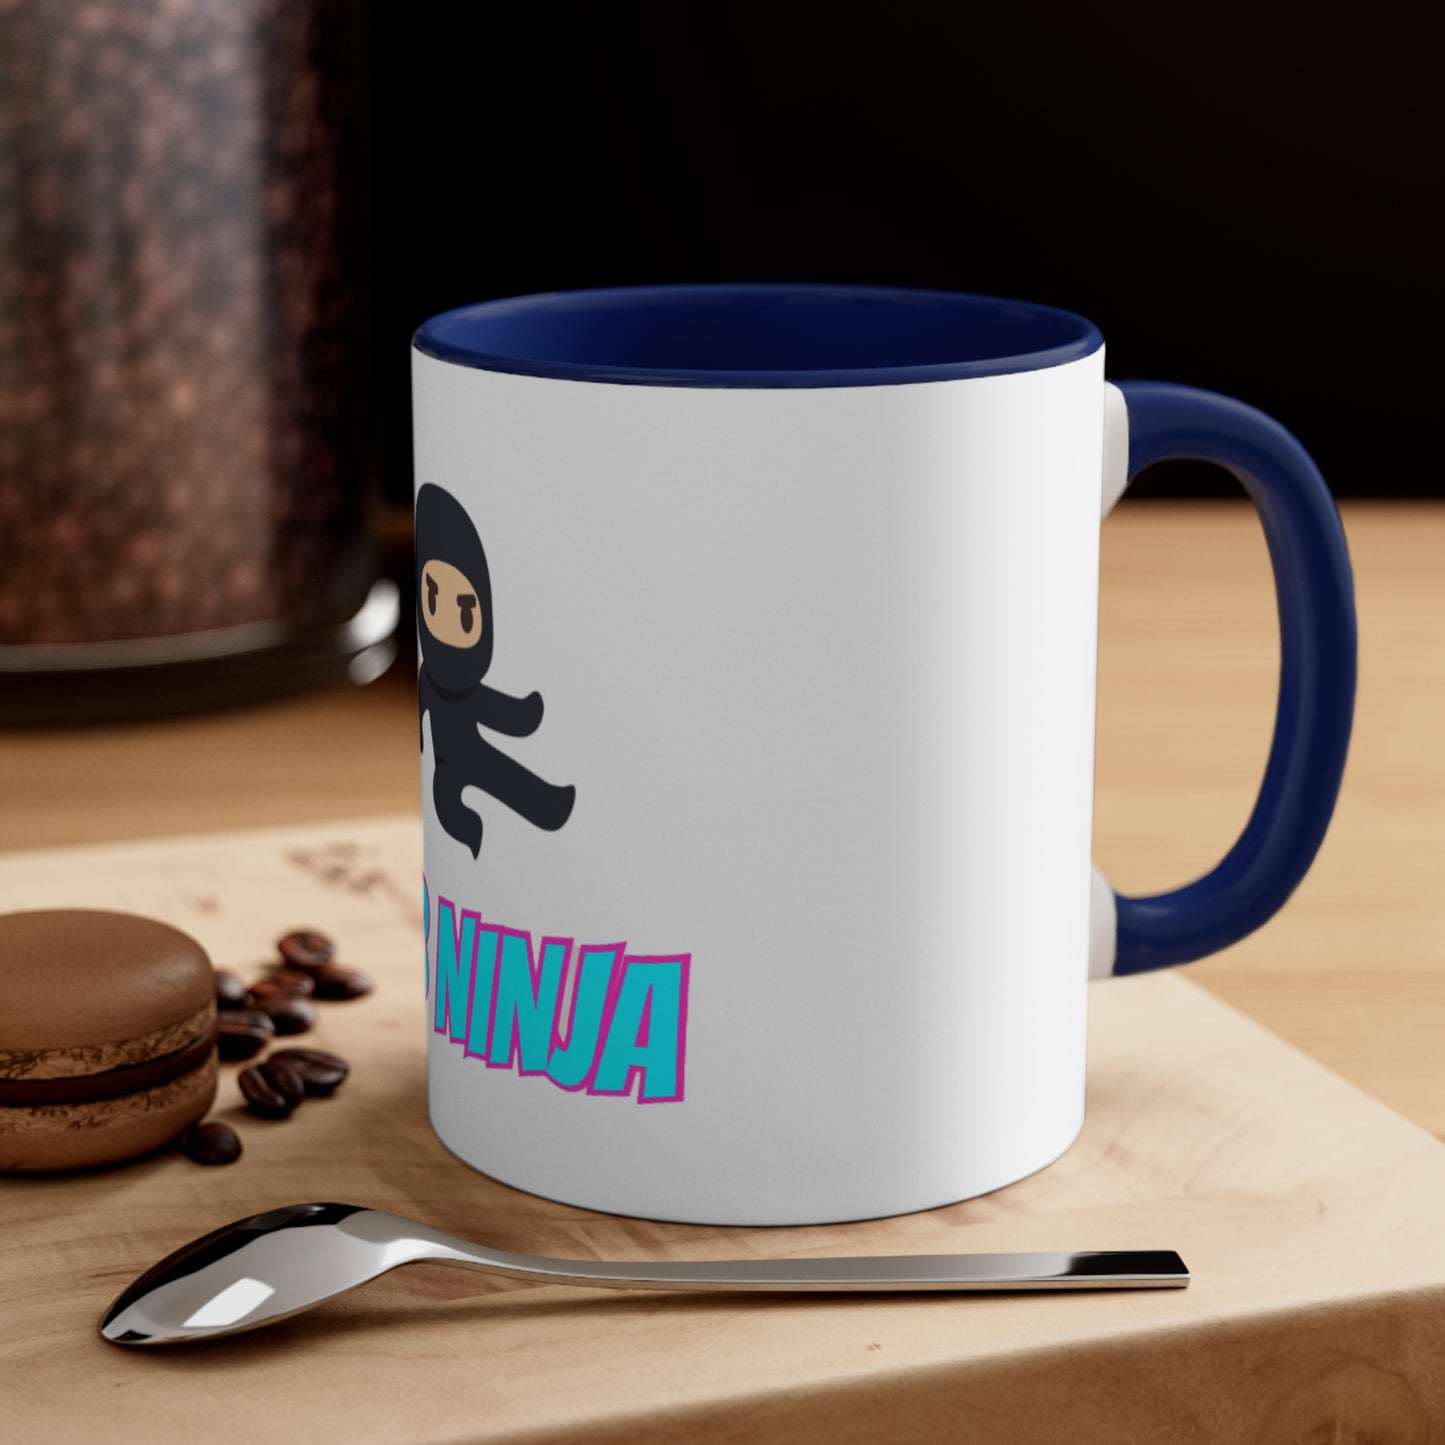 LOB Ninja Coffee Mug, 11oz